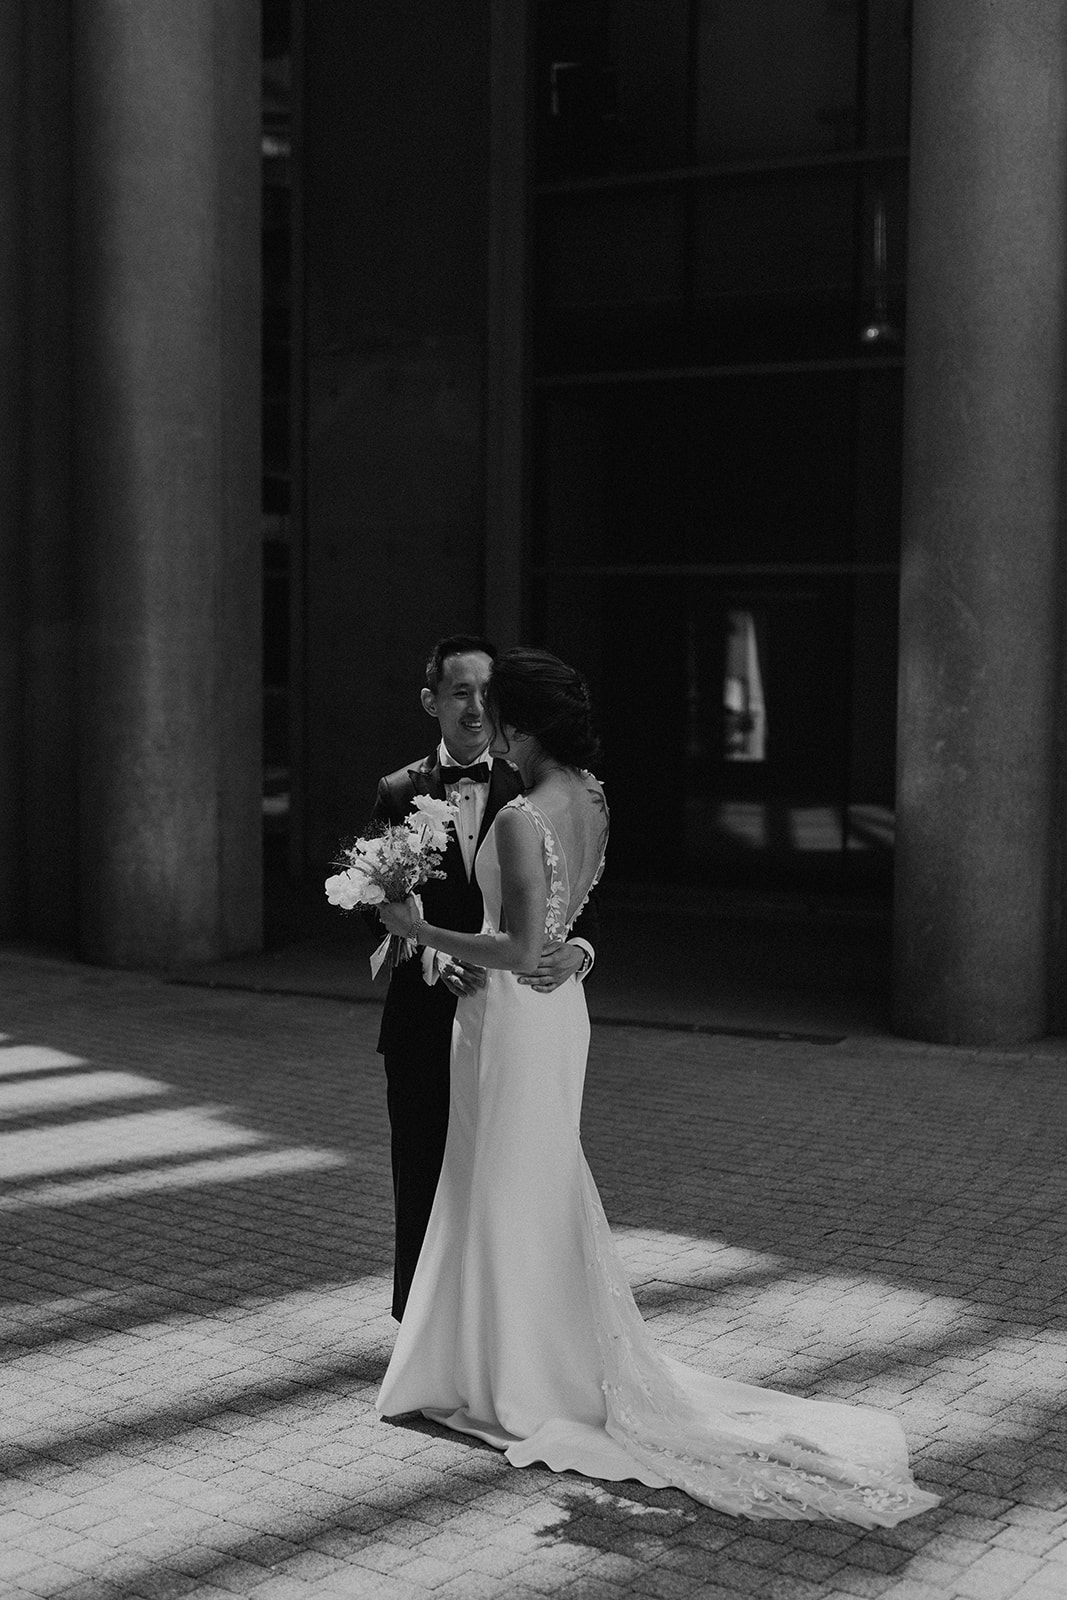 Vancouver Library Building Wedding